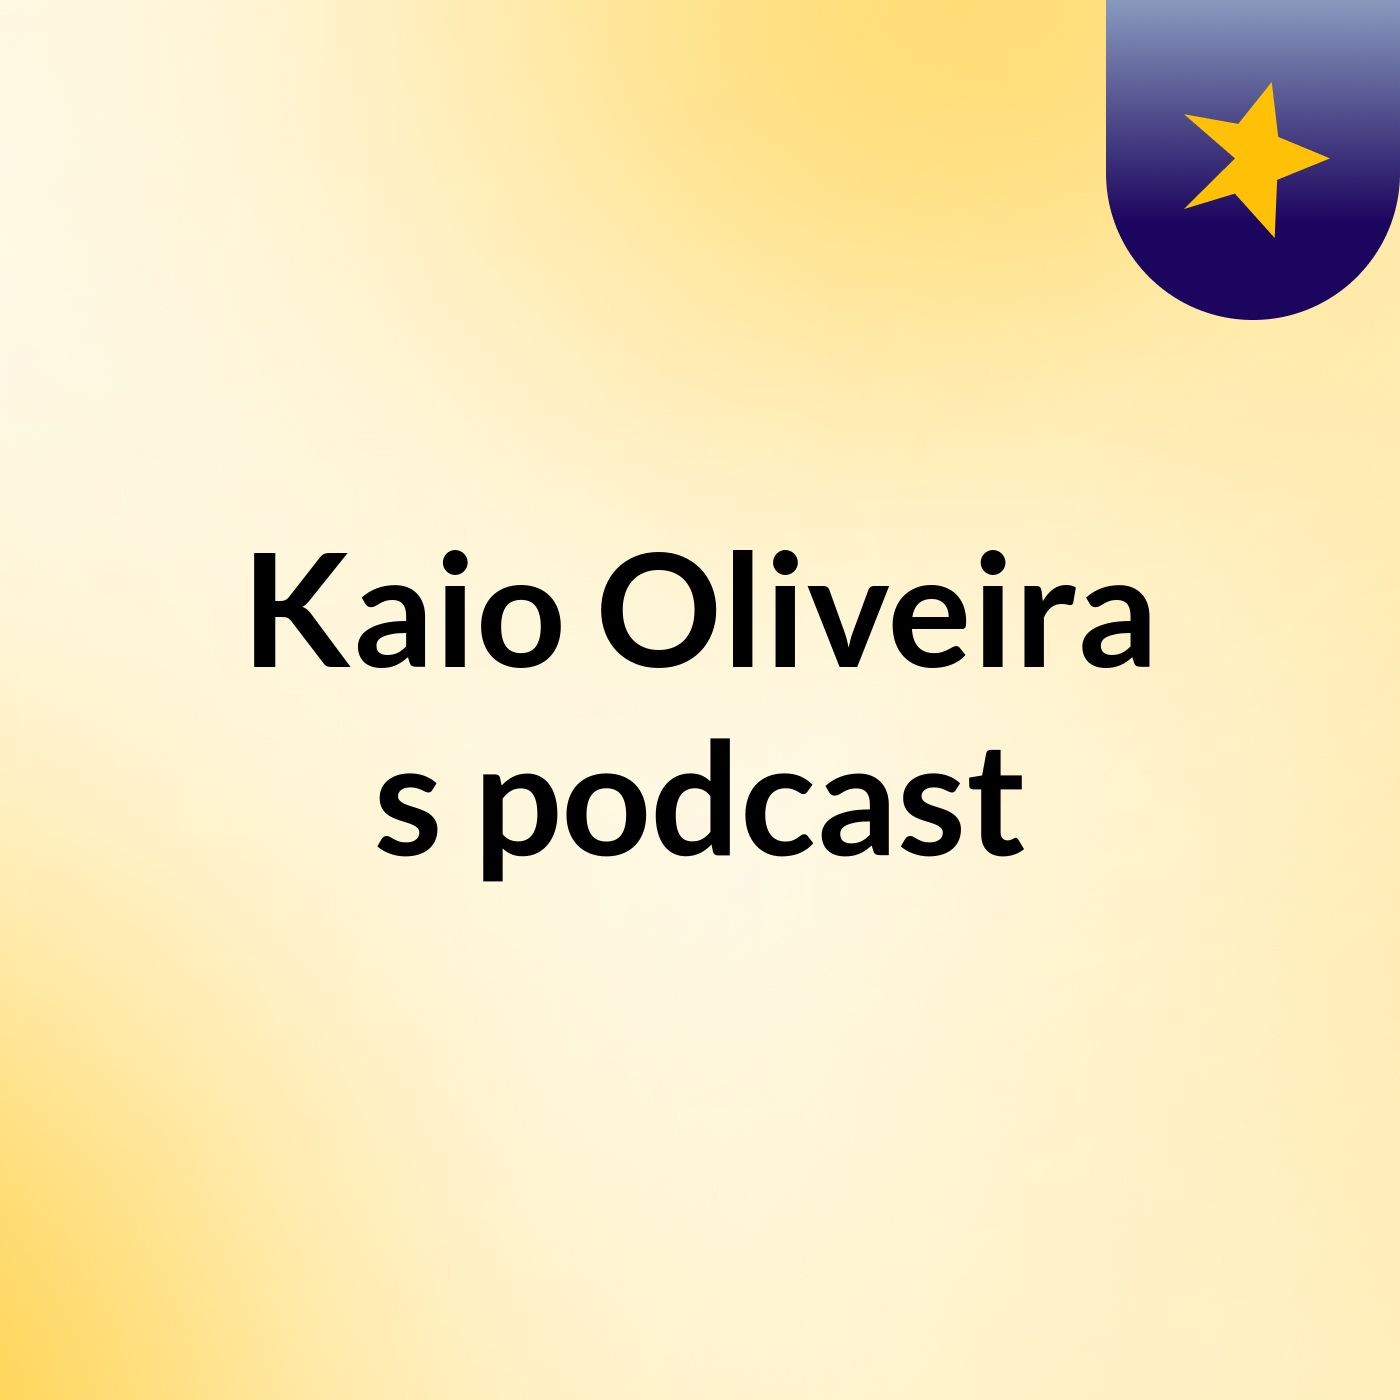 Kaio Oliveira's podcast